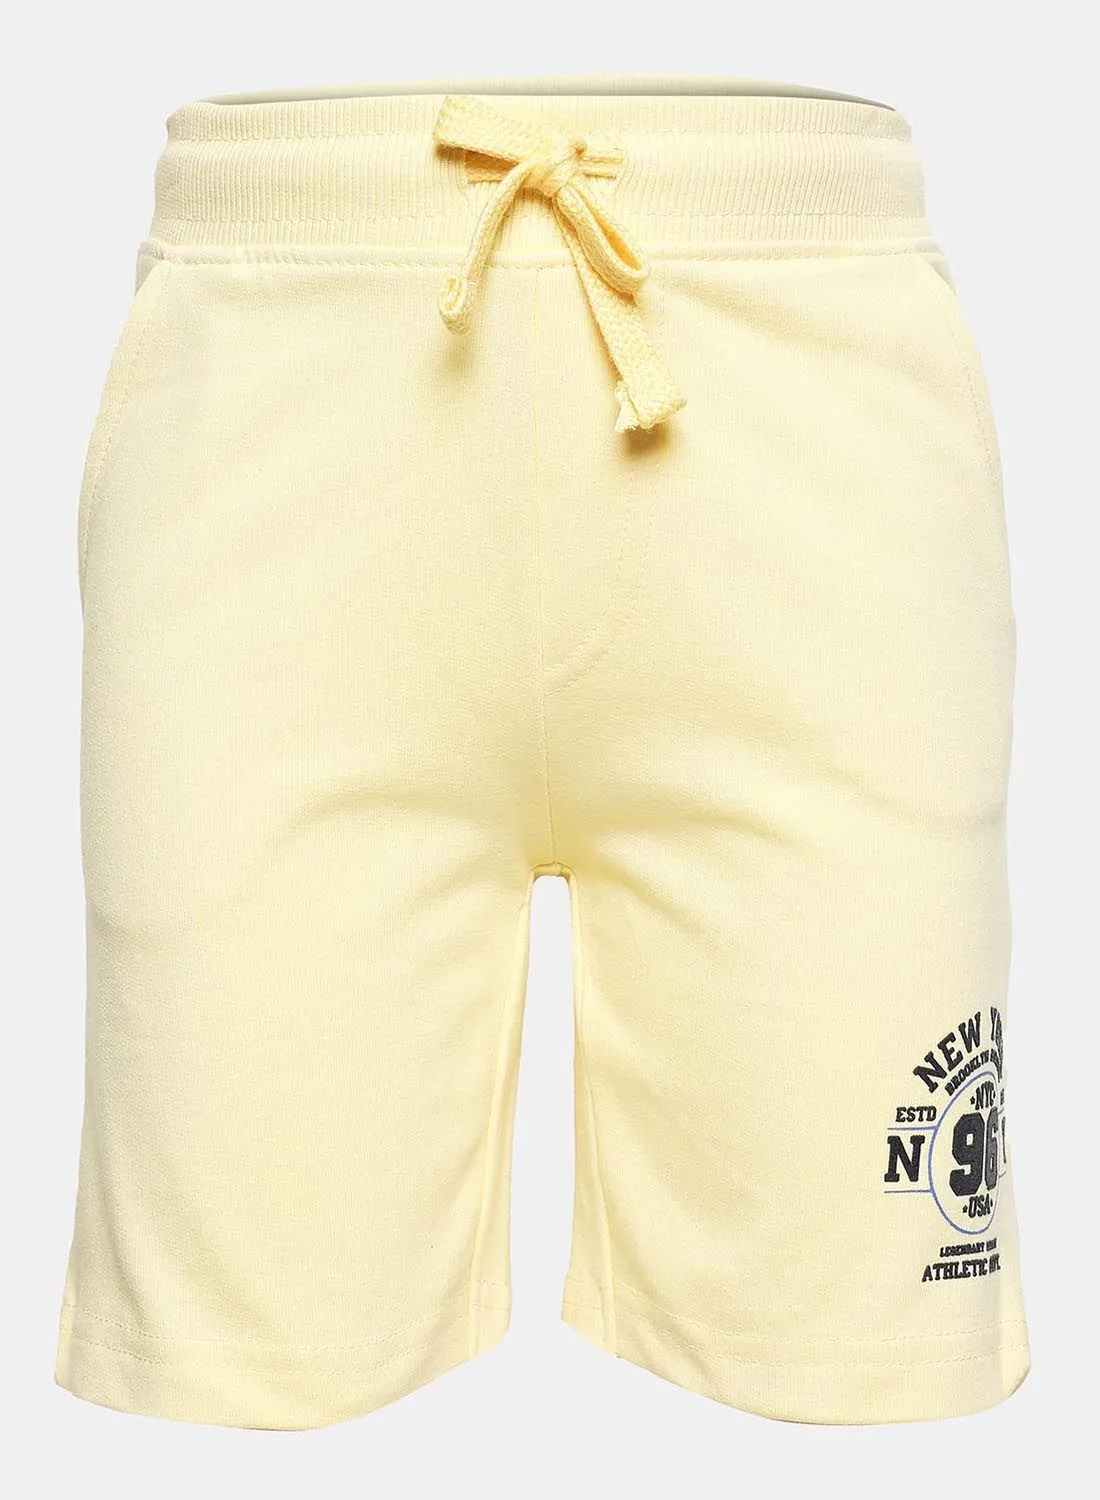 R&B Trendy Printed Shorts with Pockets and Drawstring Closure Yellow